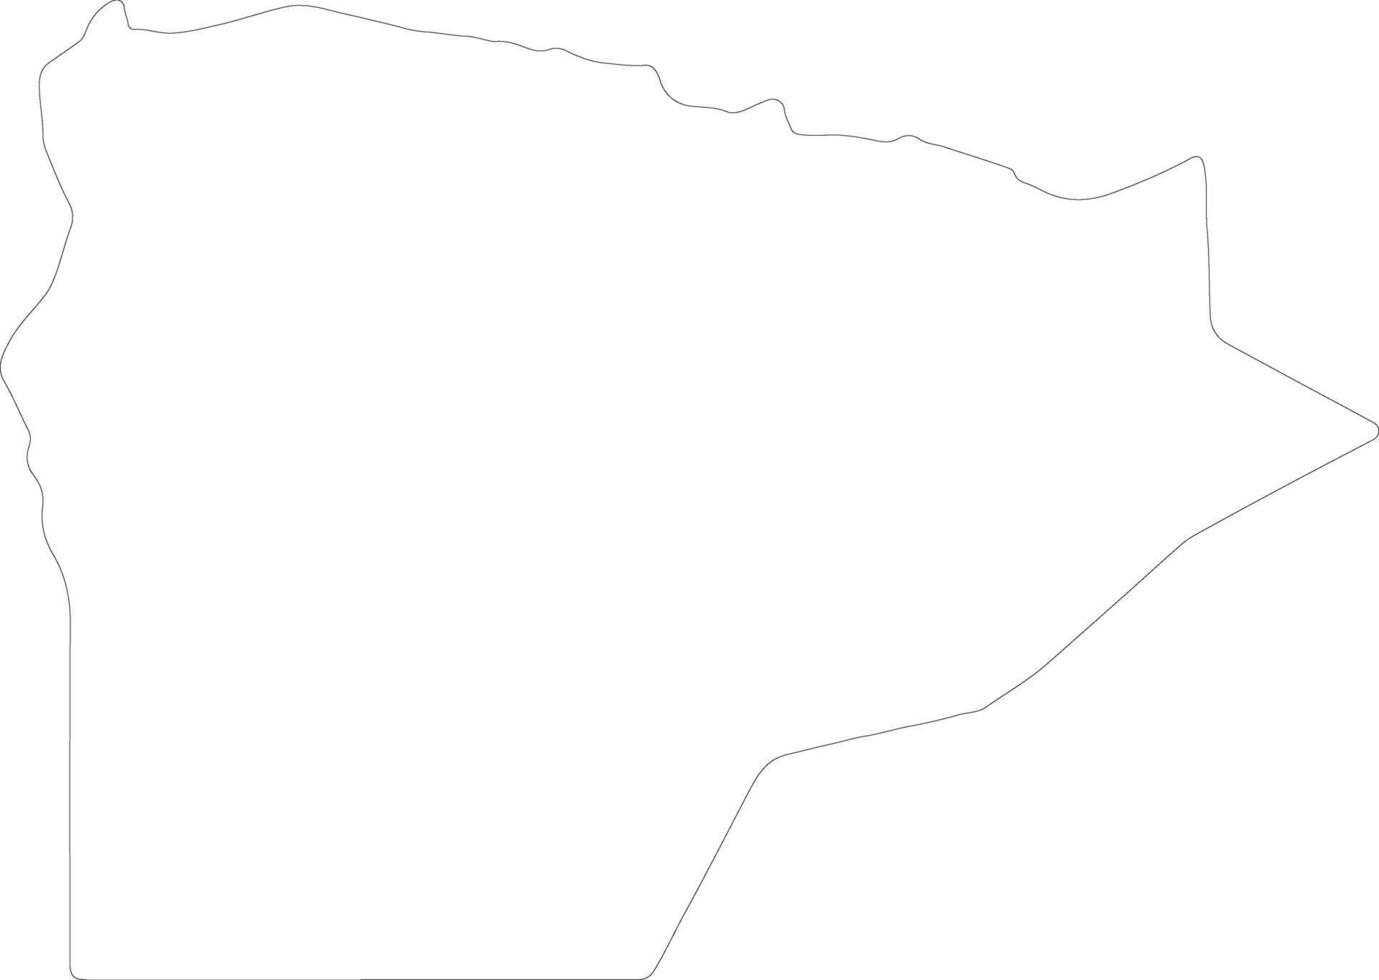 matruh Egitto schema carta geografica vettore